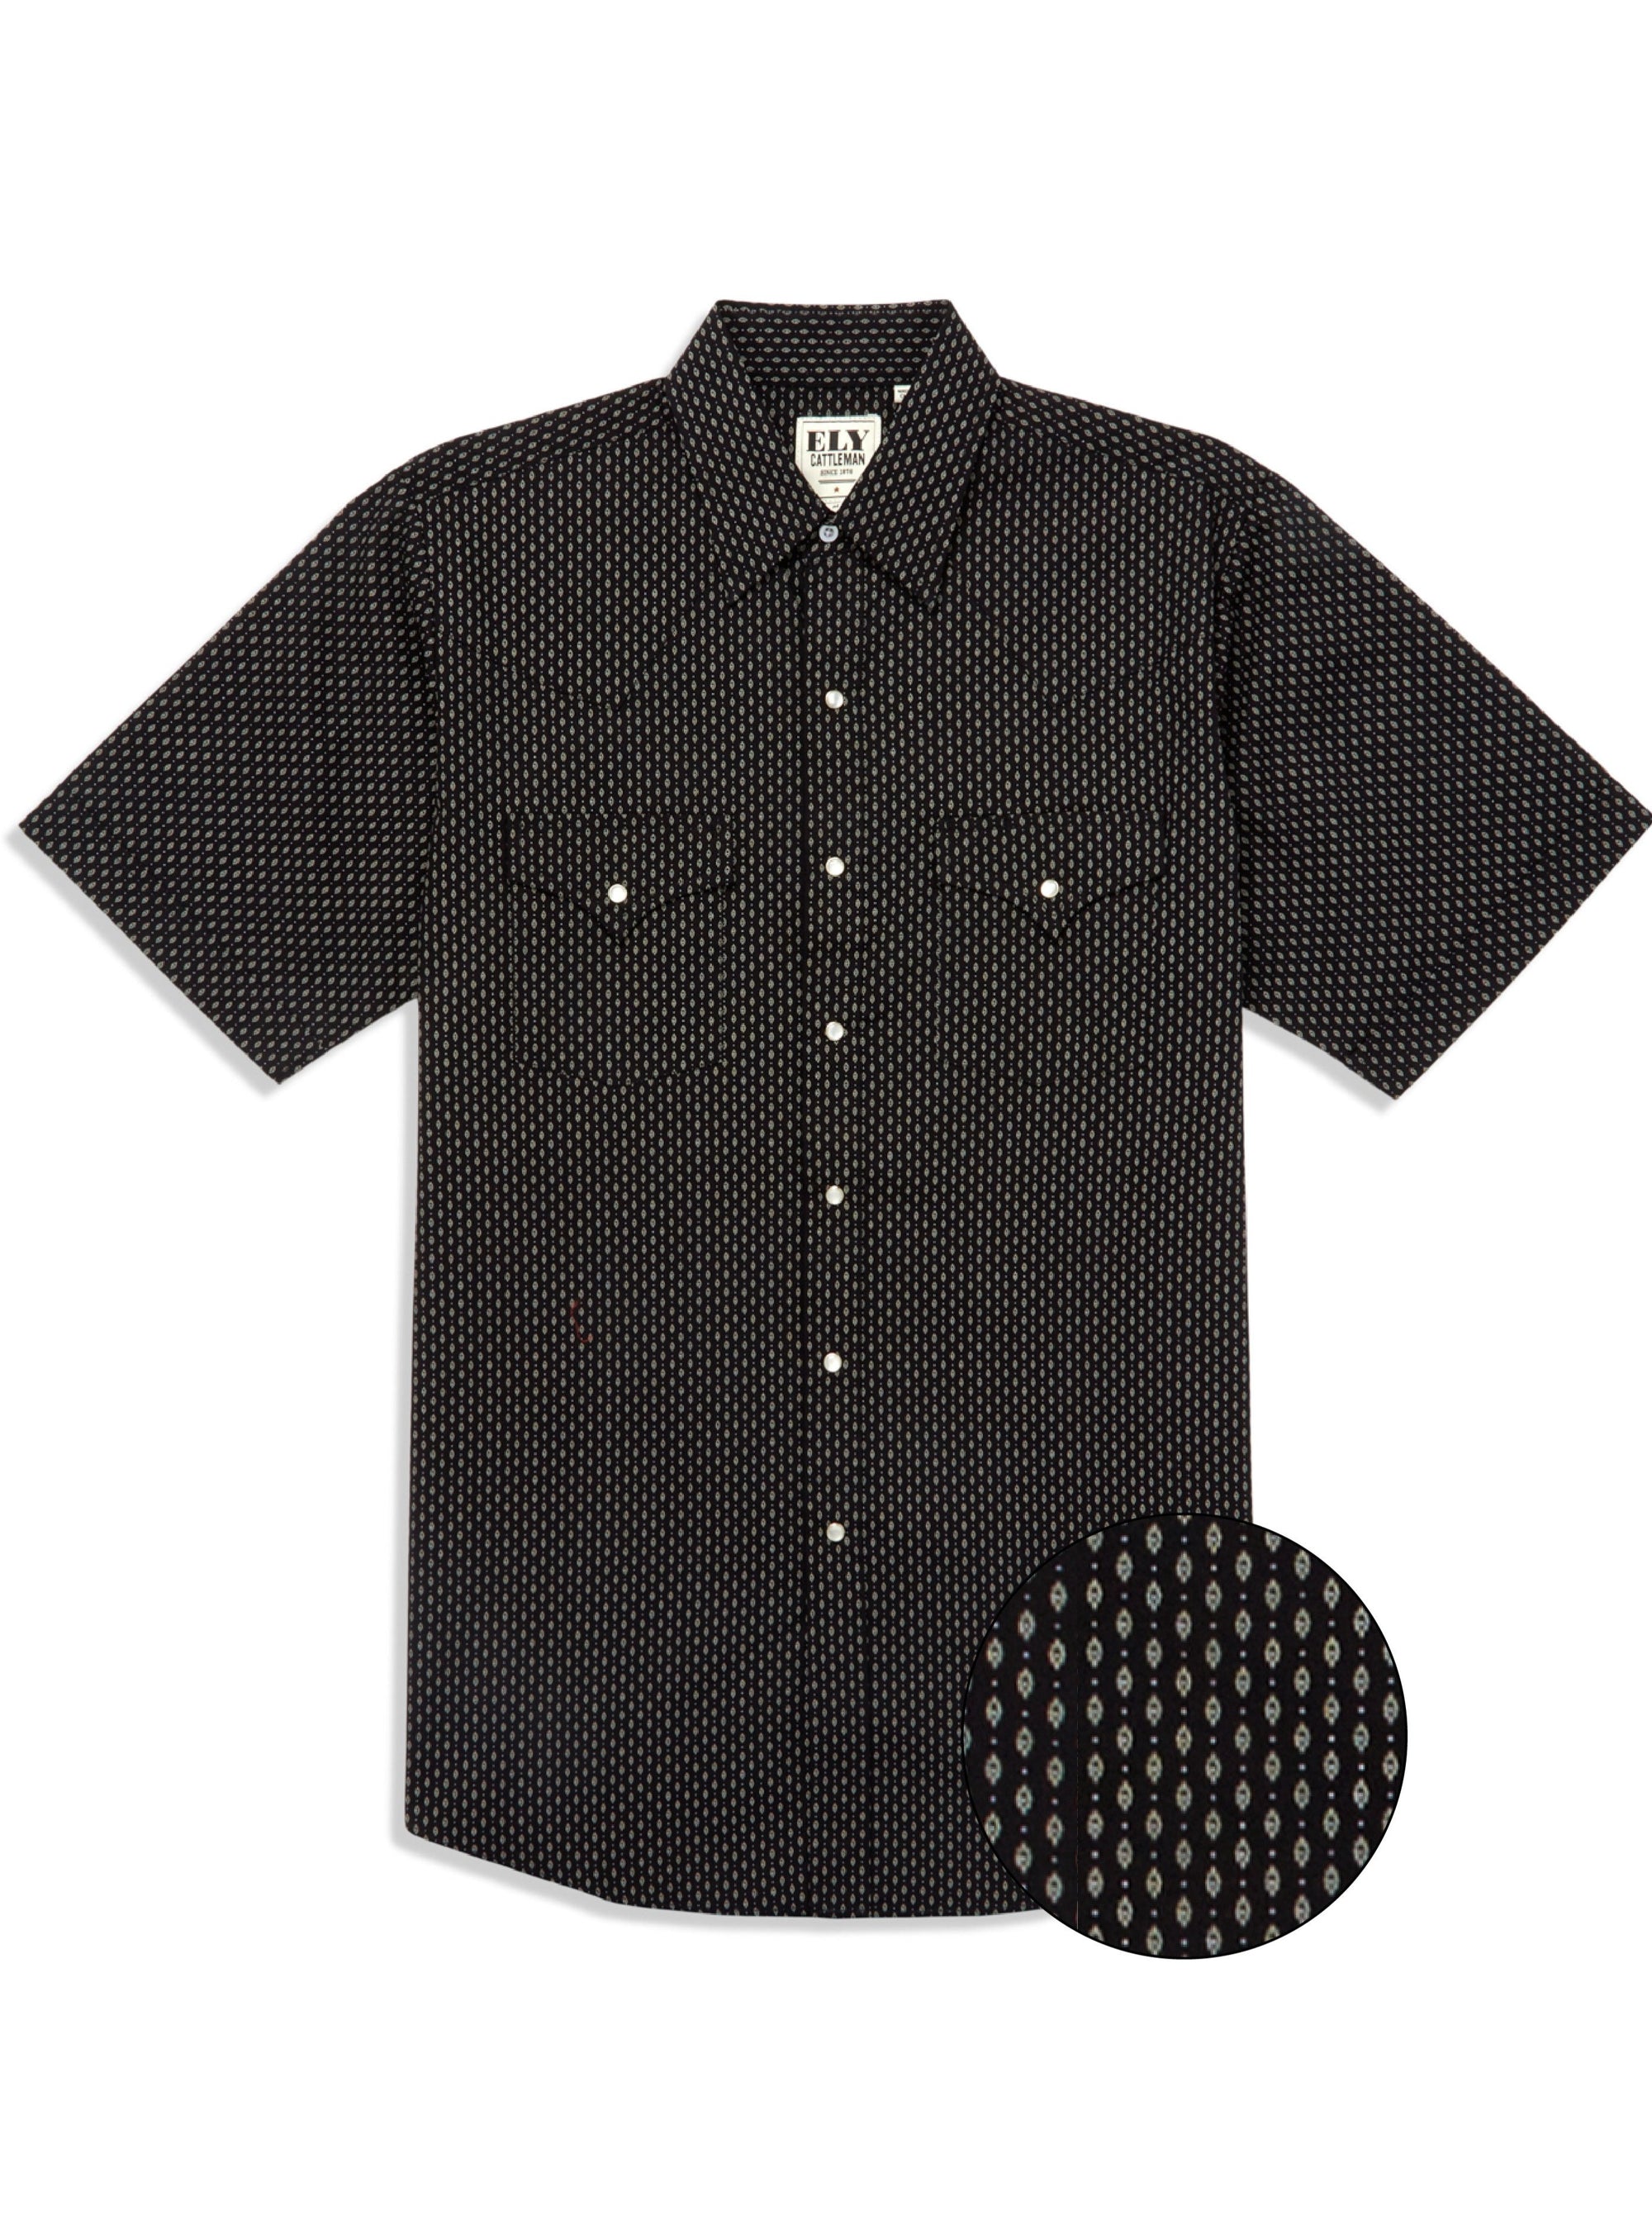 Men's Ely Cattleman Short Sleeve Mini Geo Print Western Snap Shirt - Black